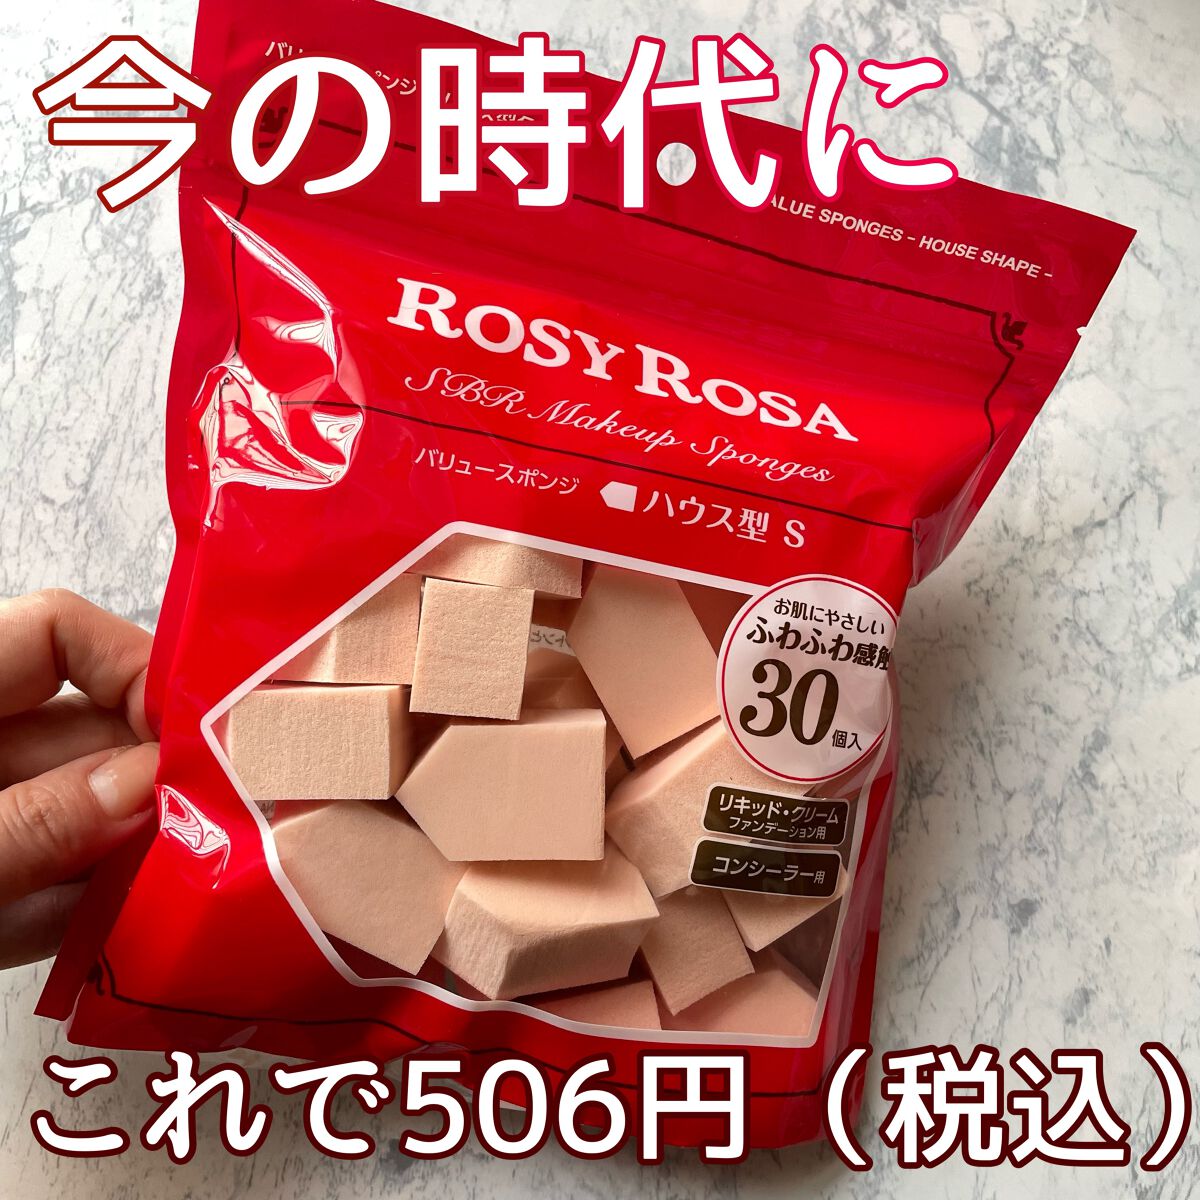 ROSY ROSA 膨らむパフ ハウス型S